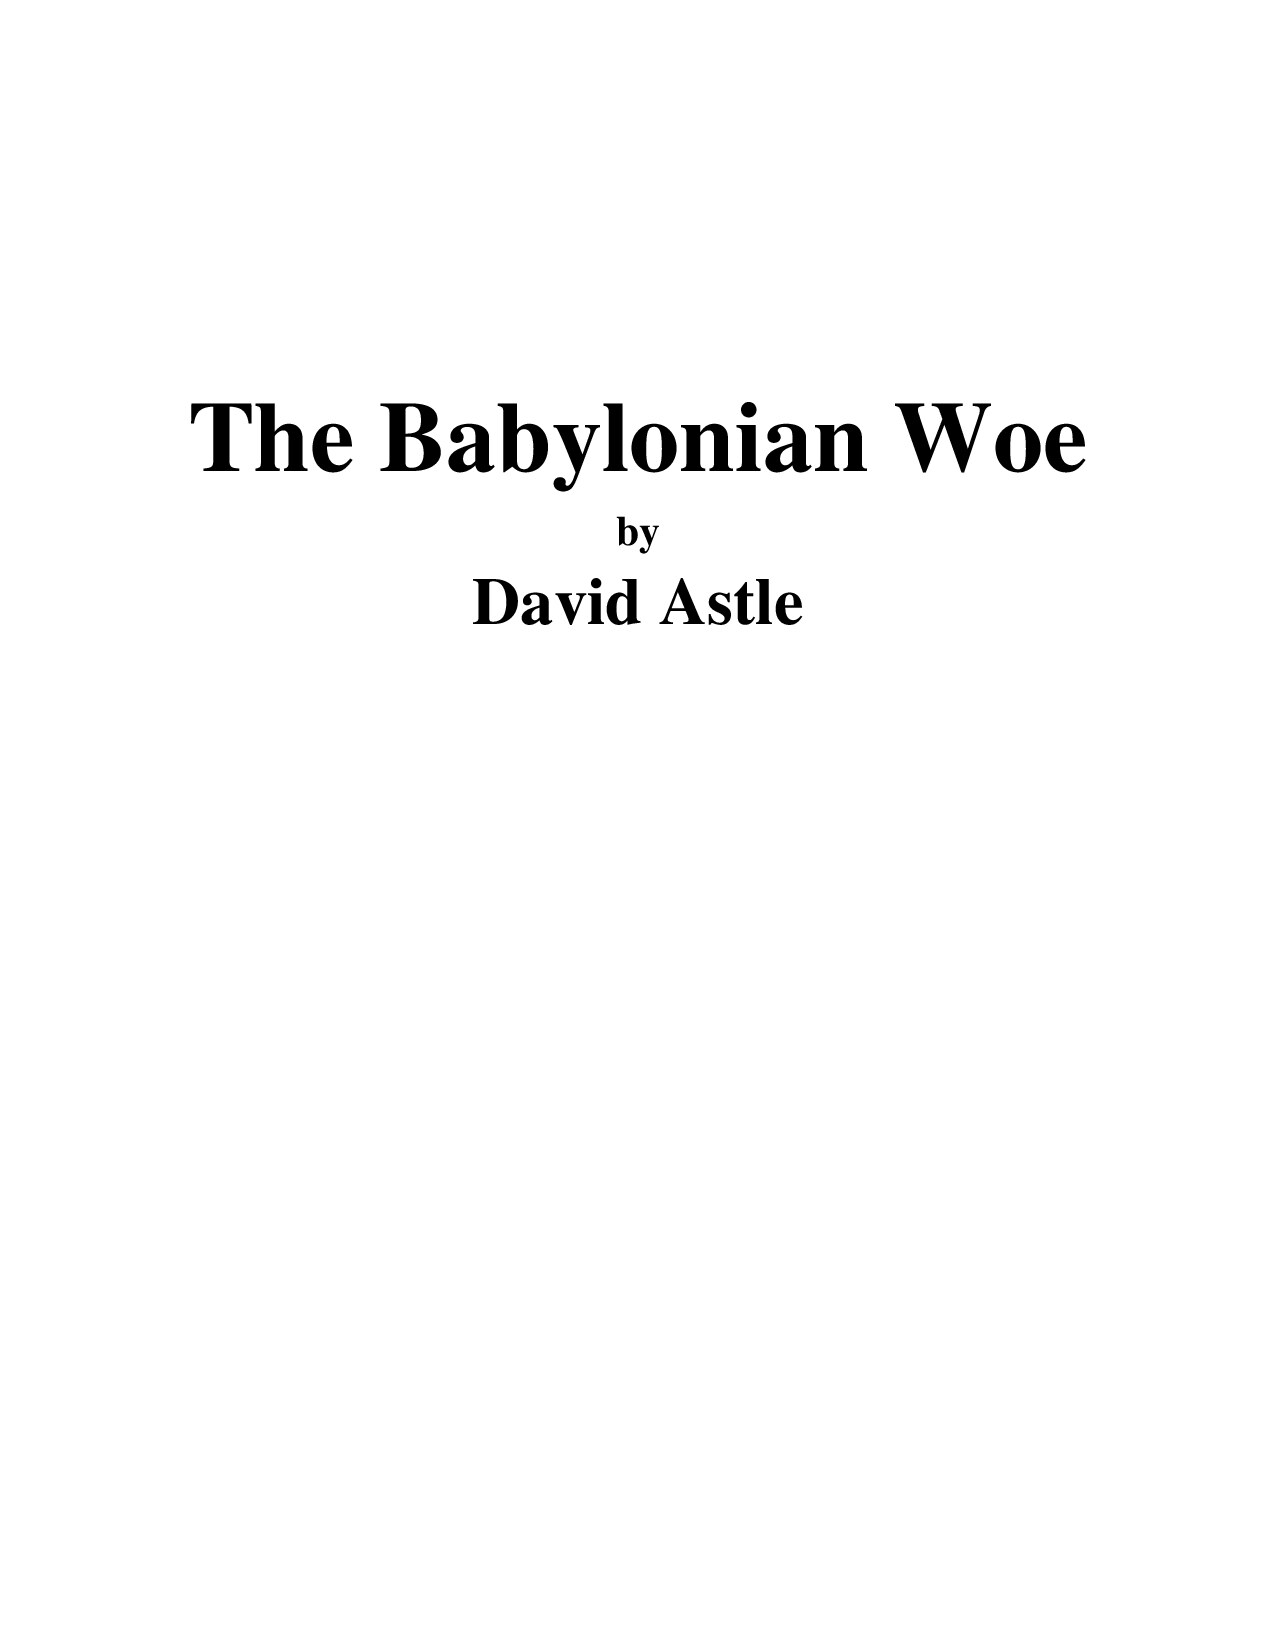 Astle, David; Babylonian Woe, The